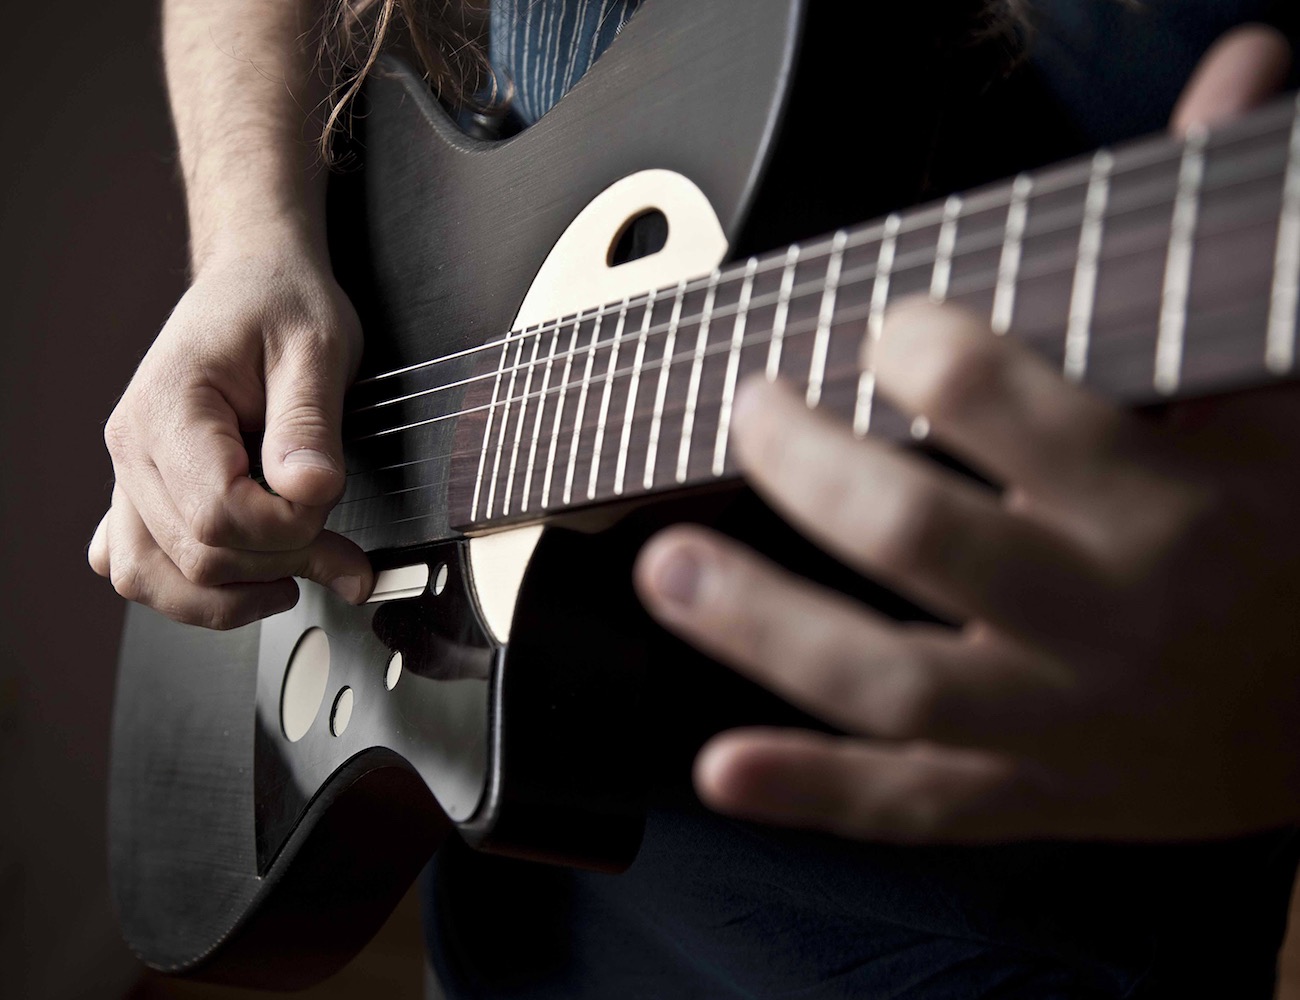 The evolving digital Sensus Smart Guitar just received $220k in funding